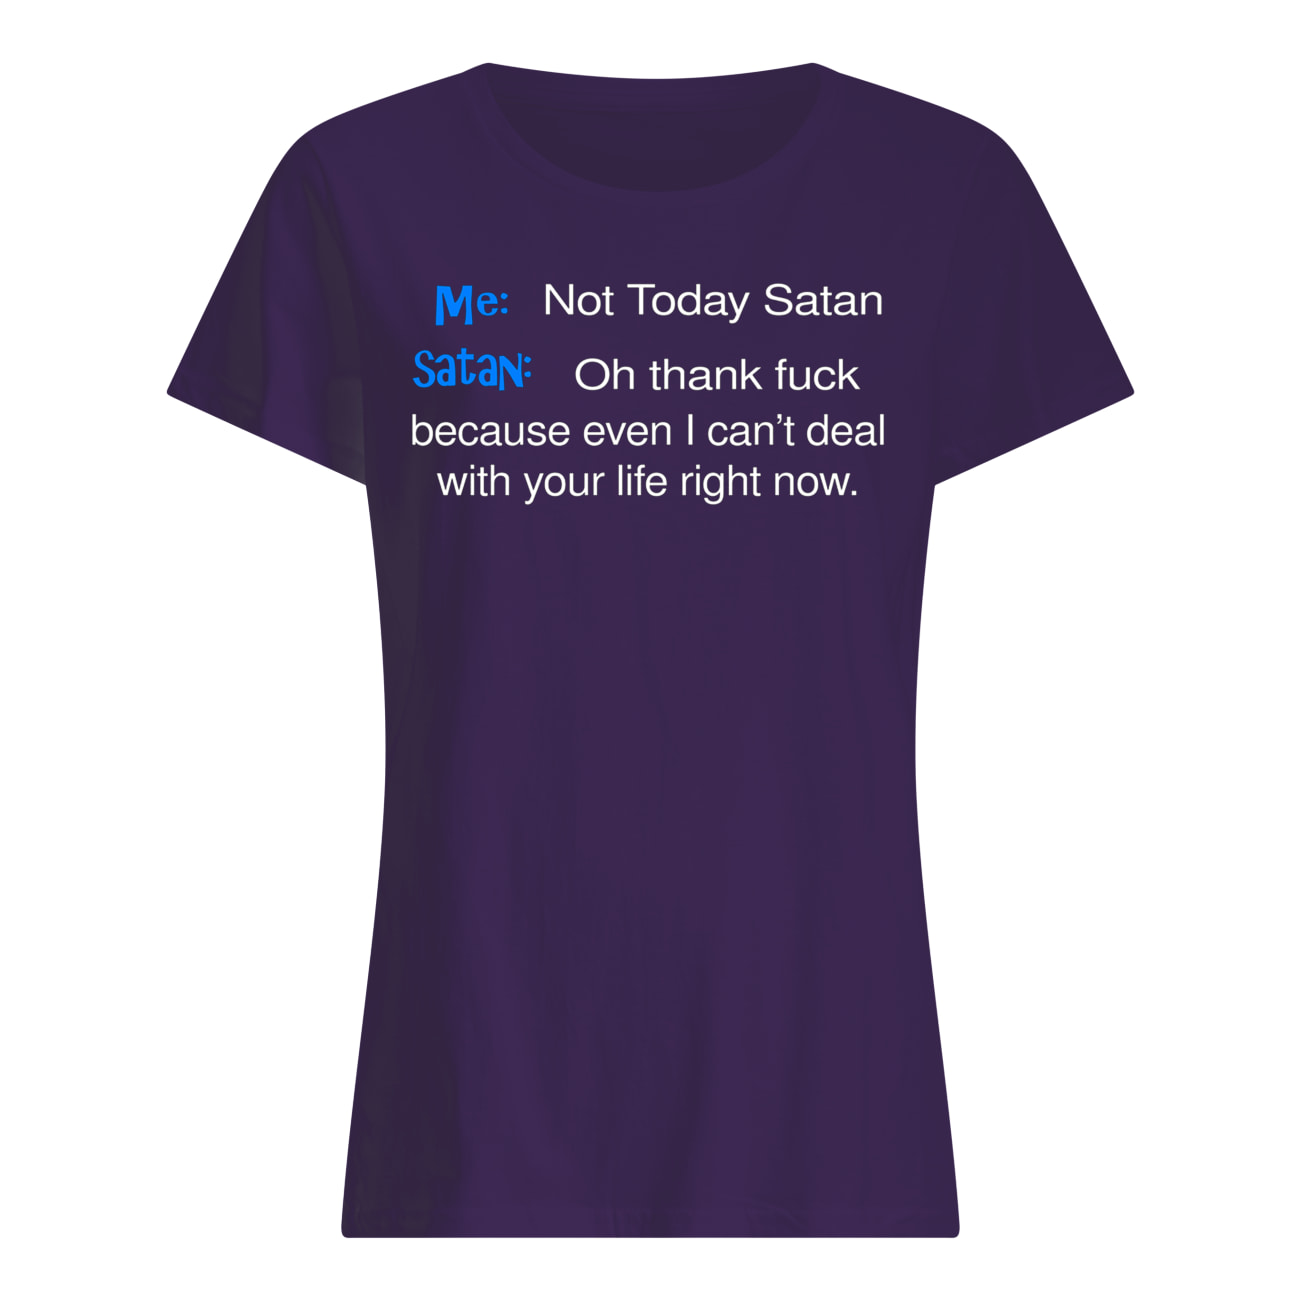 Me not today satan and satan oh thank fuck womens shirt